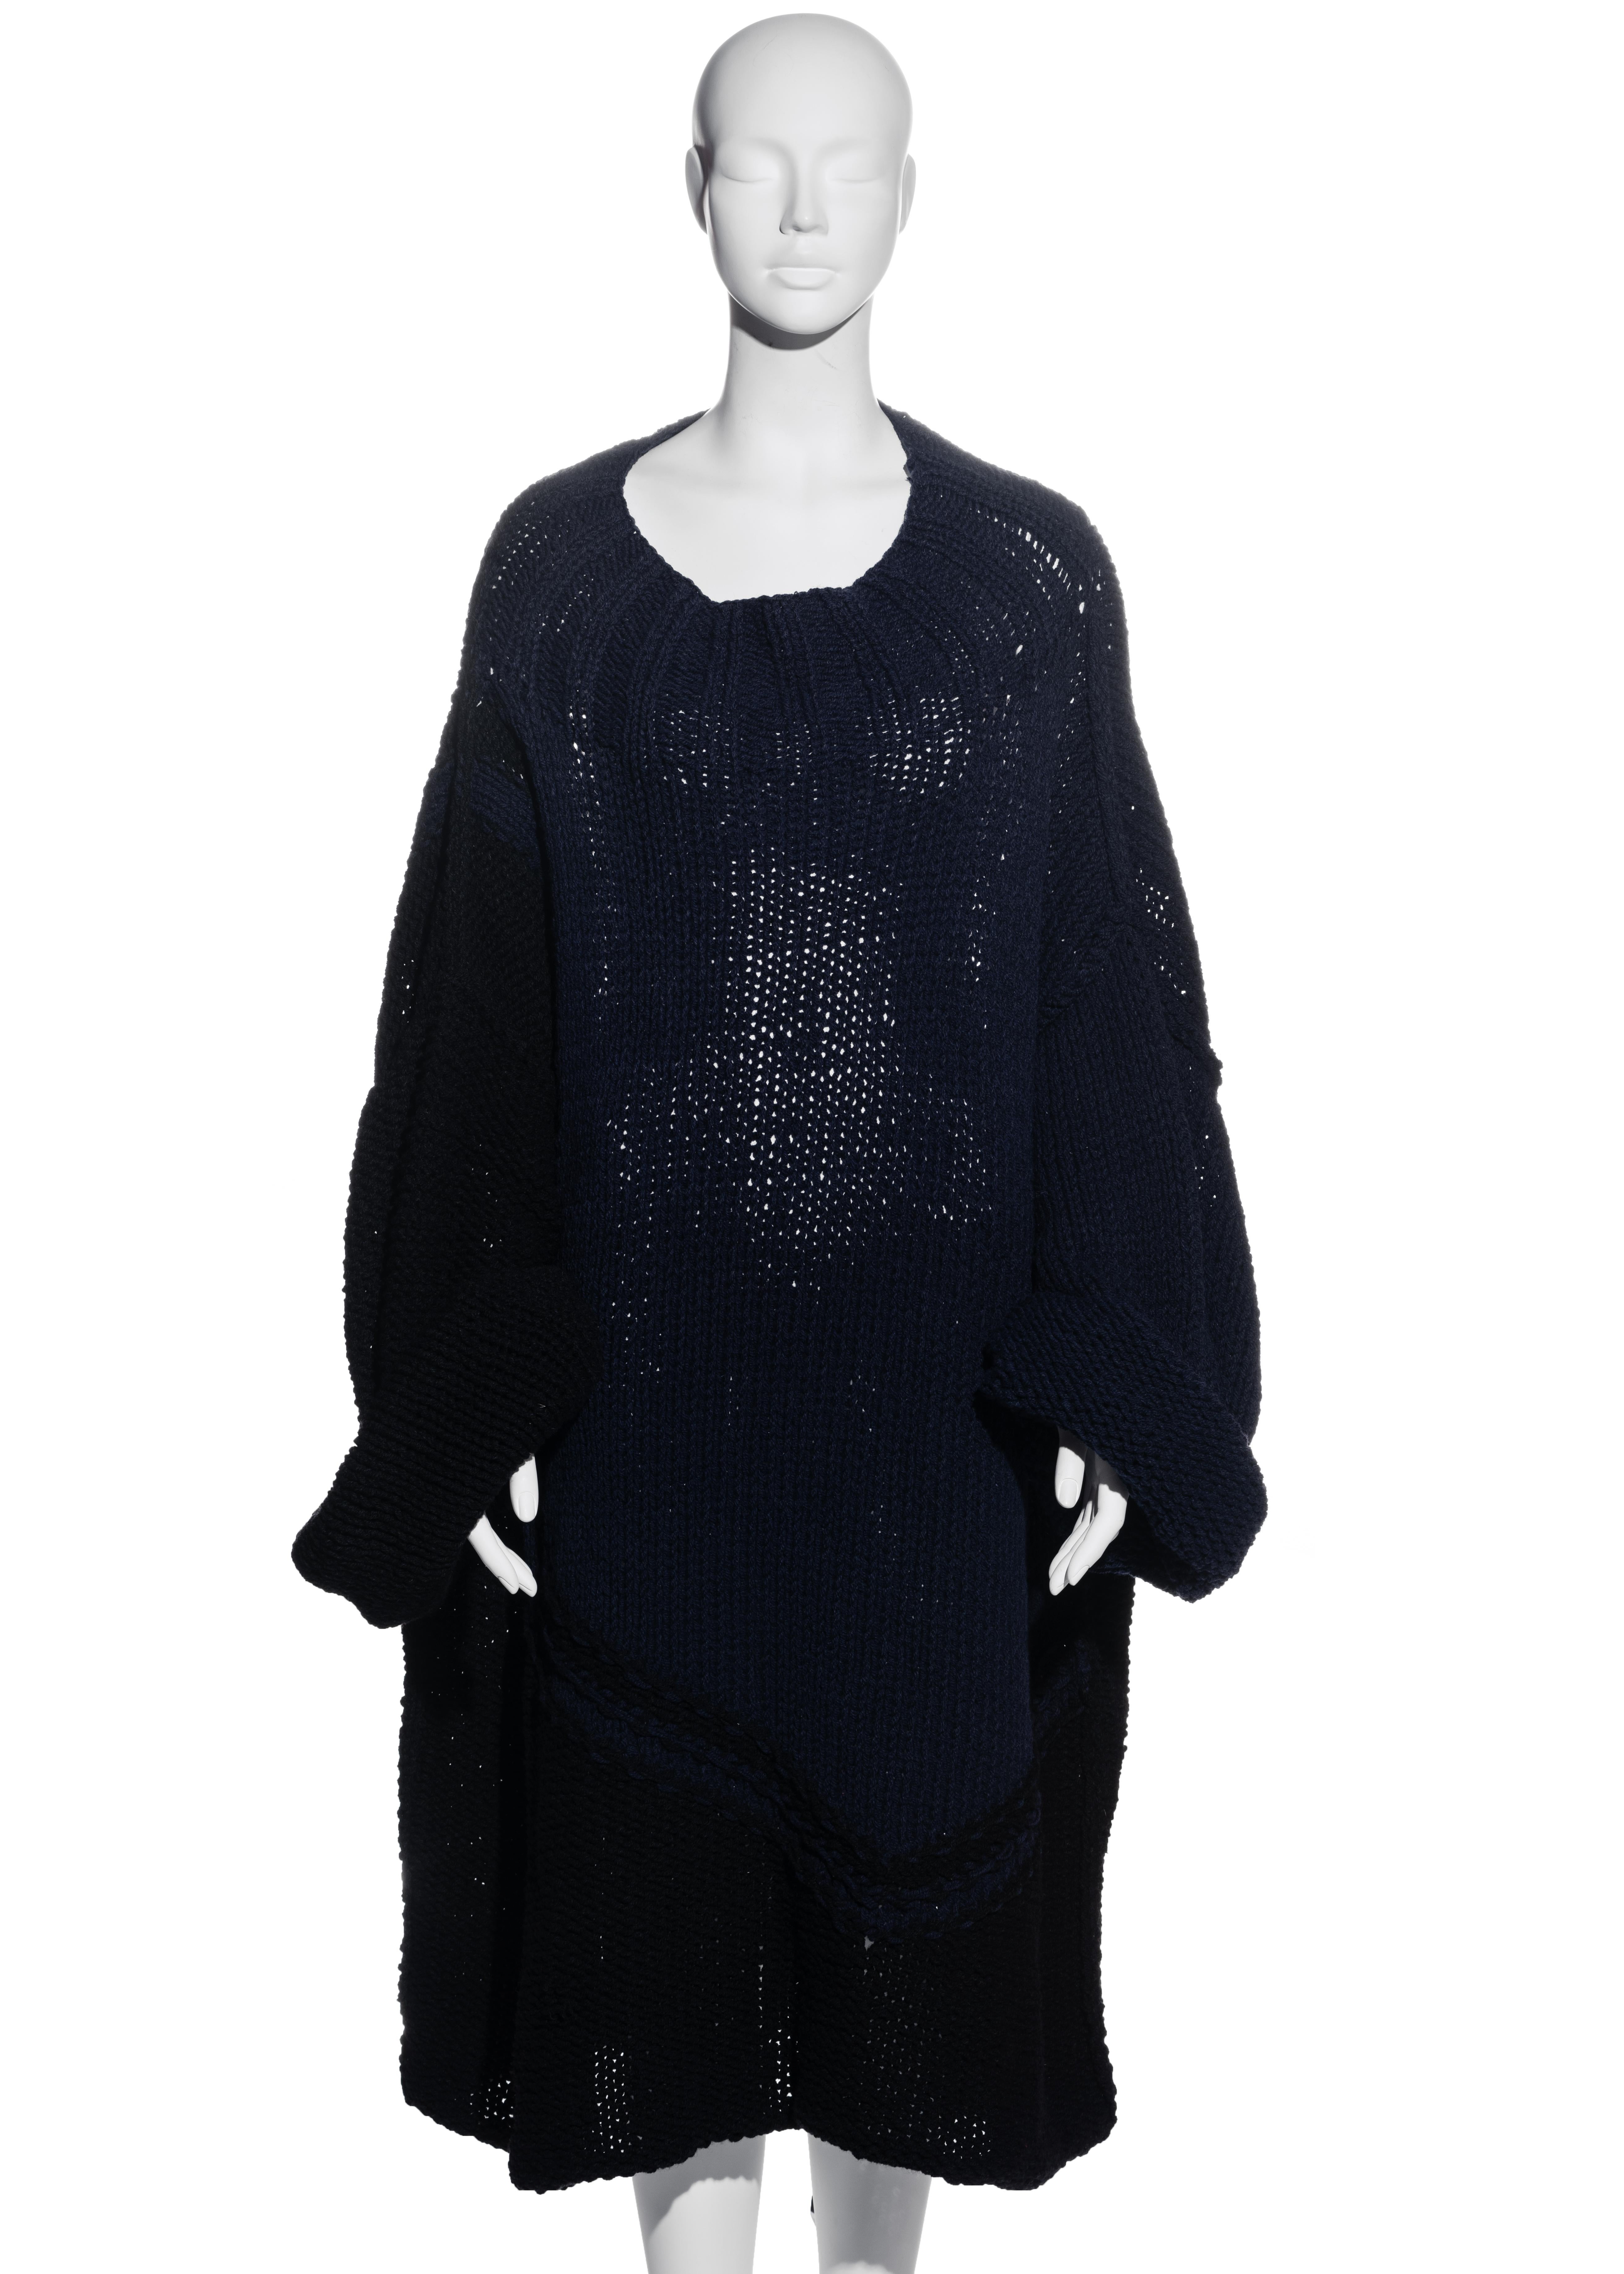 ▪ Yohji Yamamoto navy and black knitted sweater
▪ 90% Wool, 5% Cotton, 5% Polyurethane 
▪ Extremely oversized fit 
▪ Labelled size medium 
▪ Fall-Winter 1984 